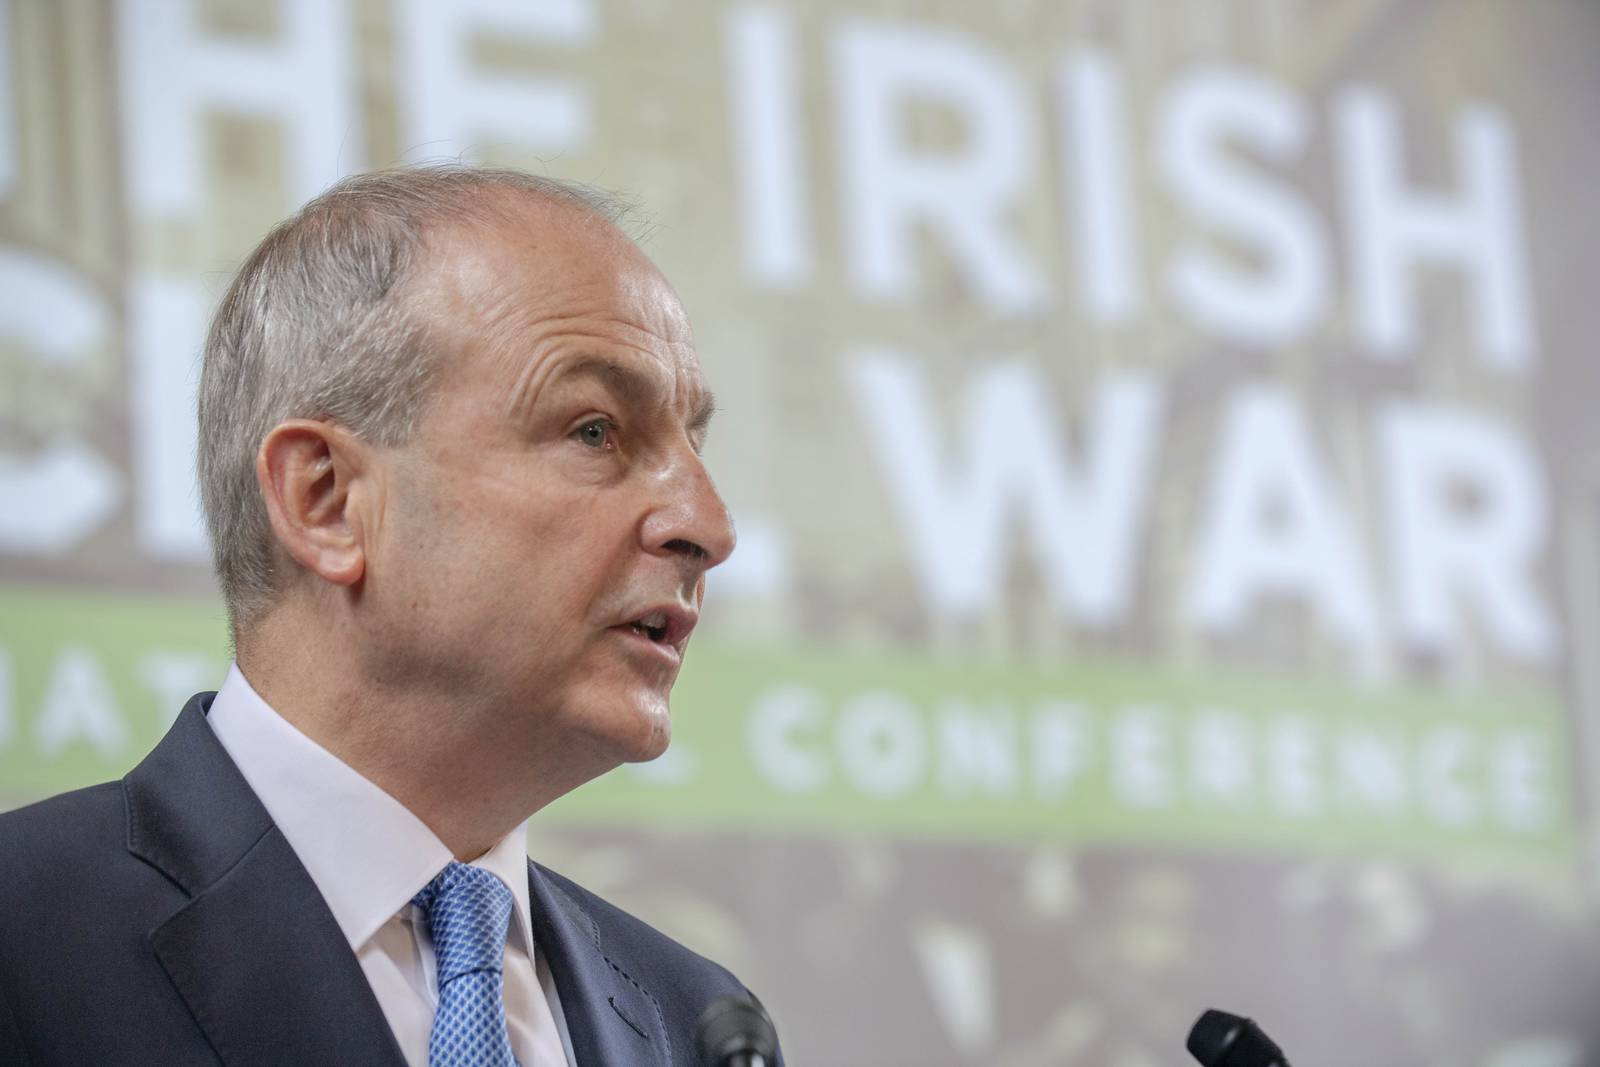 Landmark National Conference on Irish Civil War